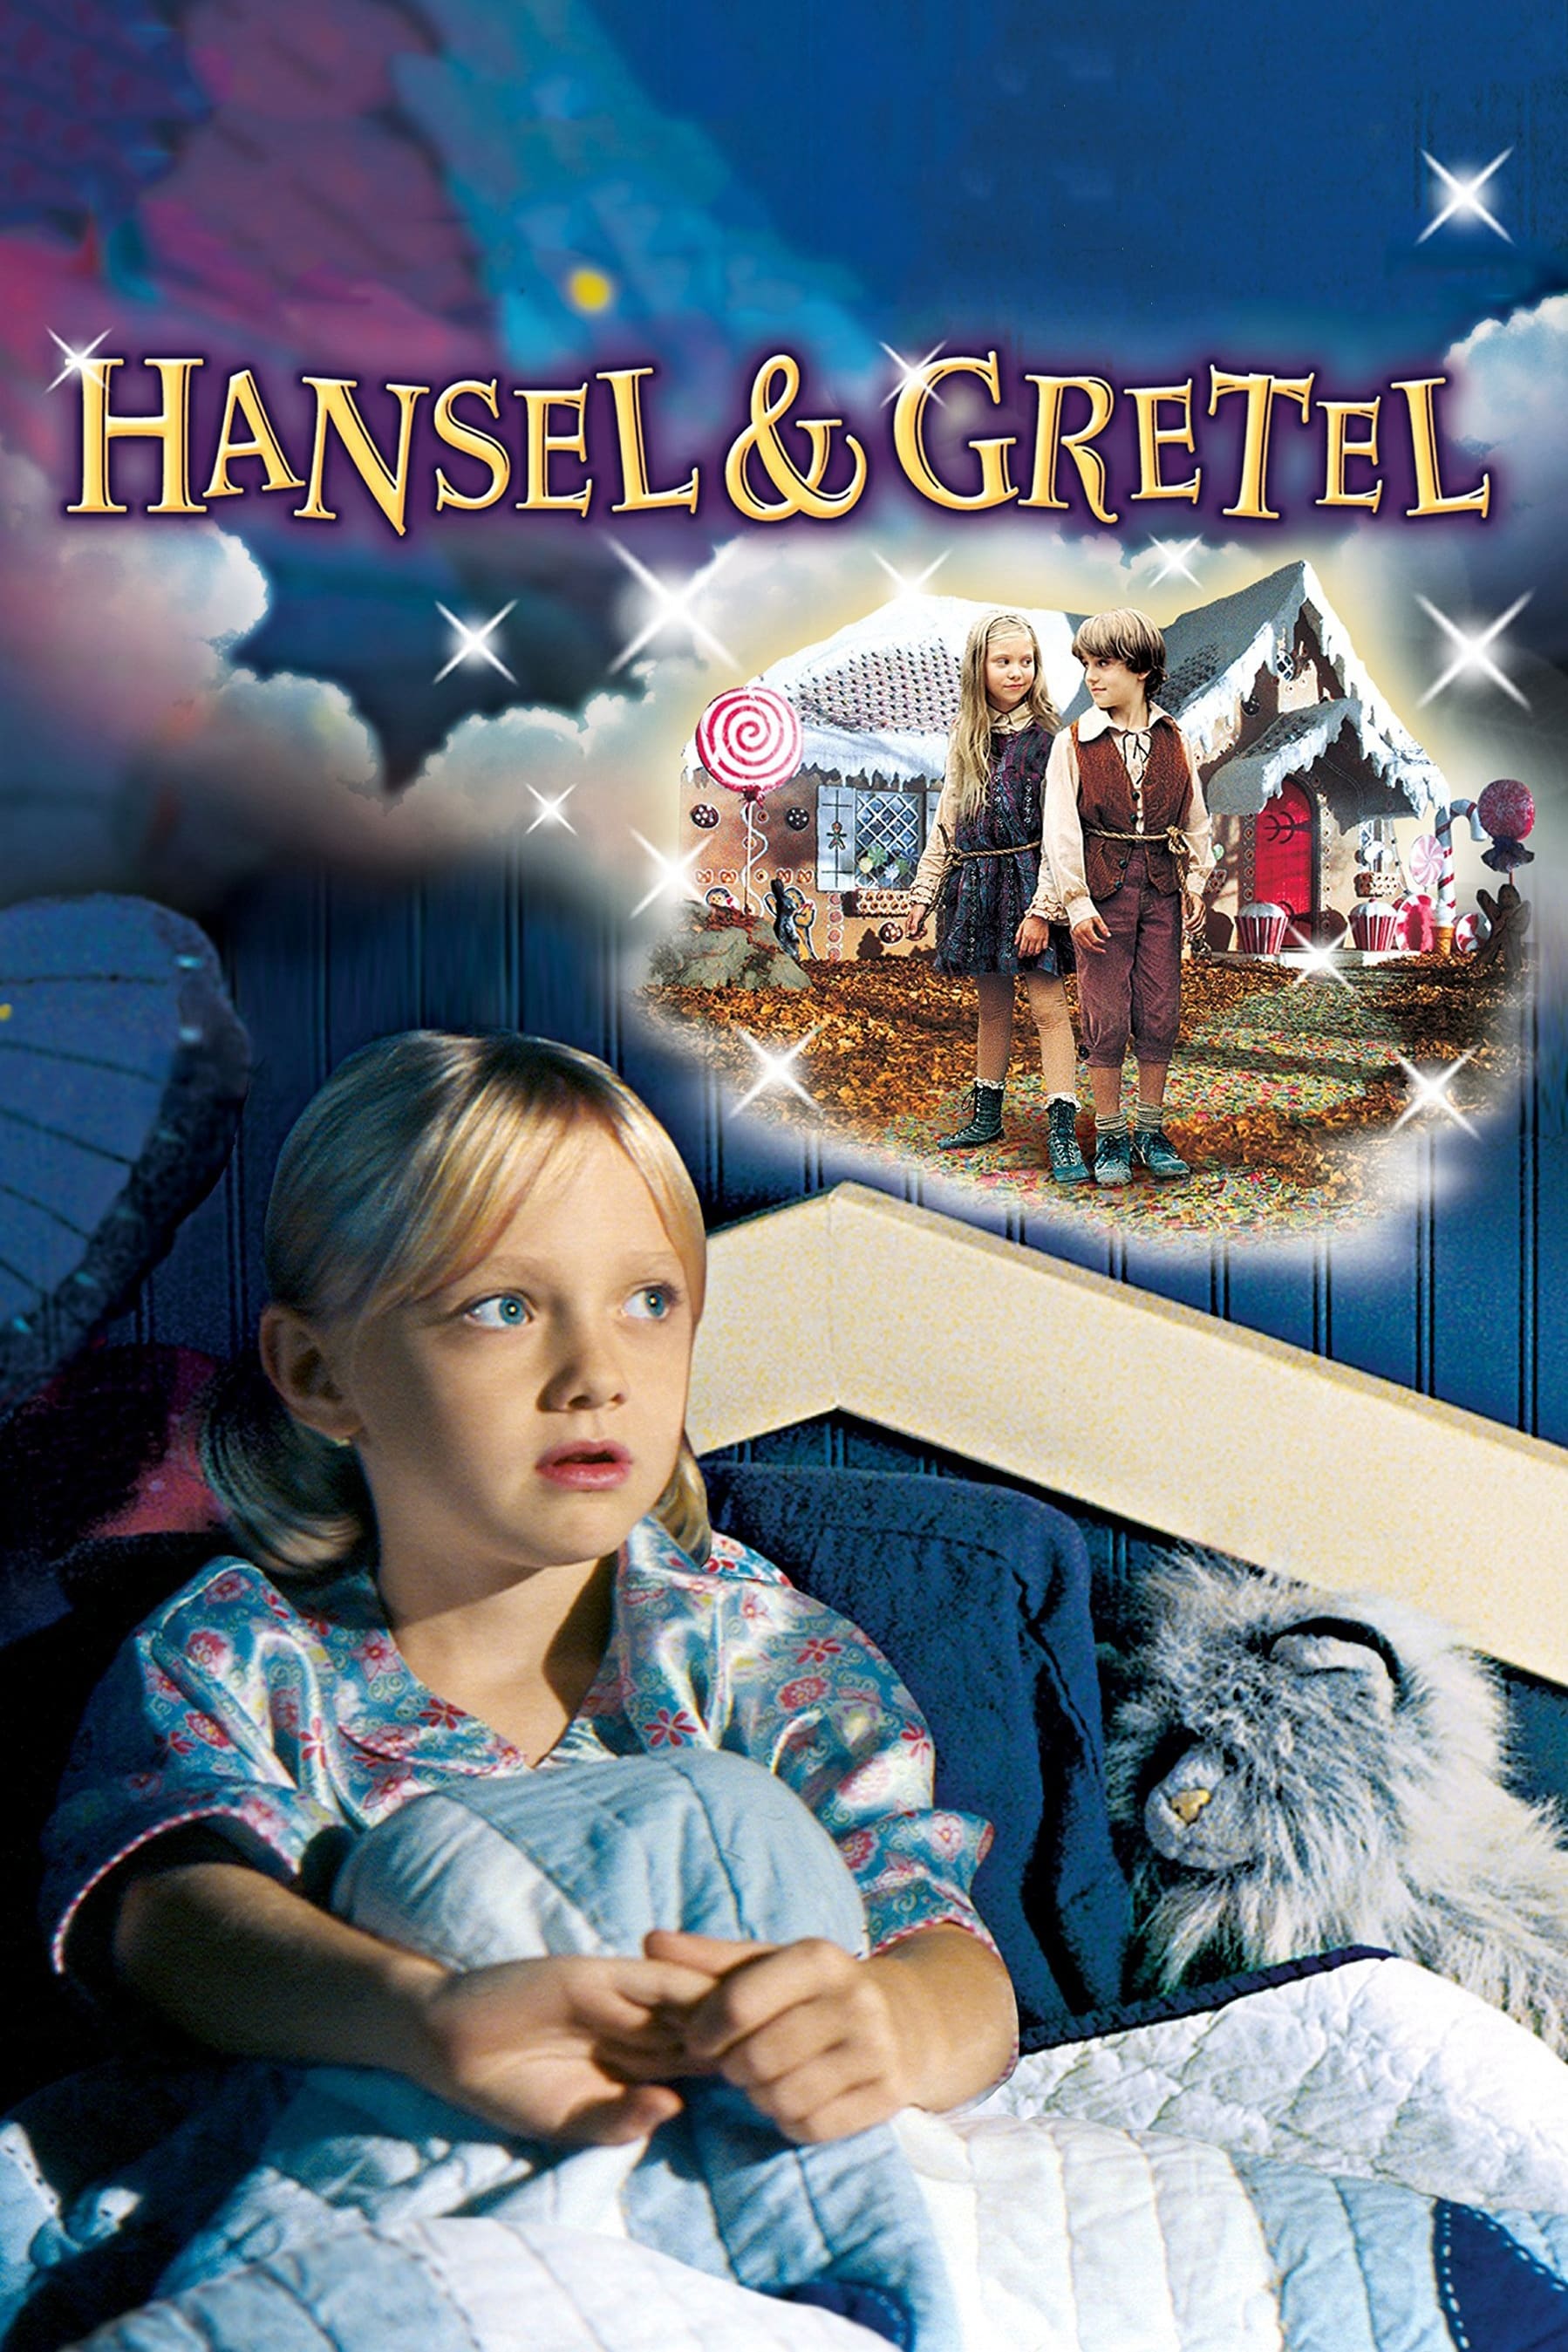 Hansel & Gretel Movie Online Full on 123Movies